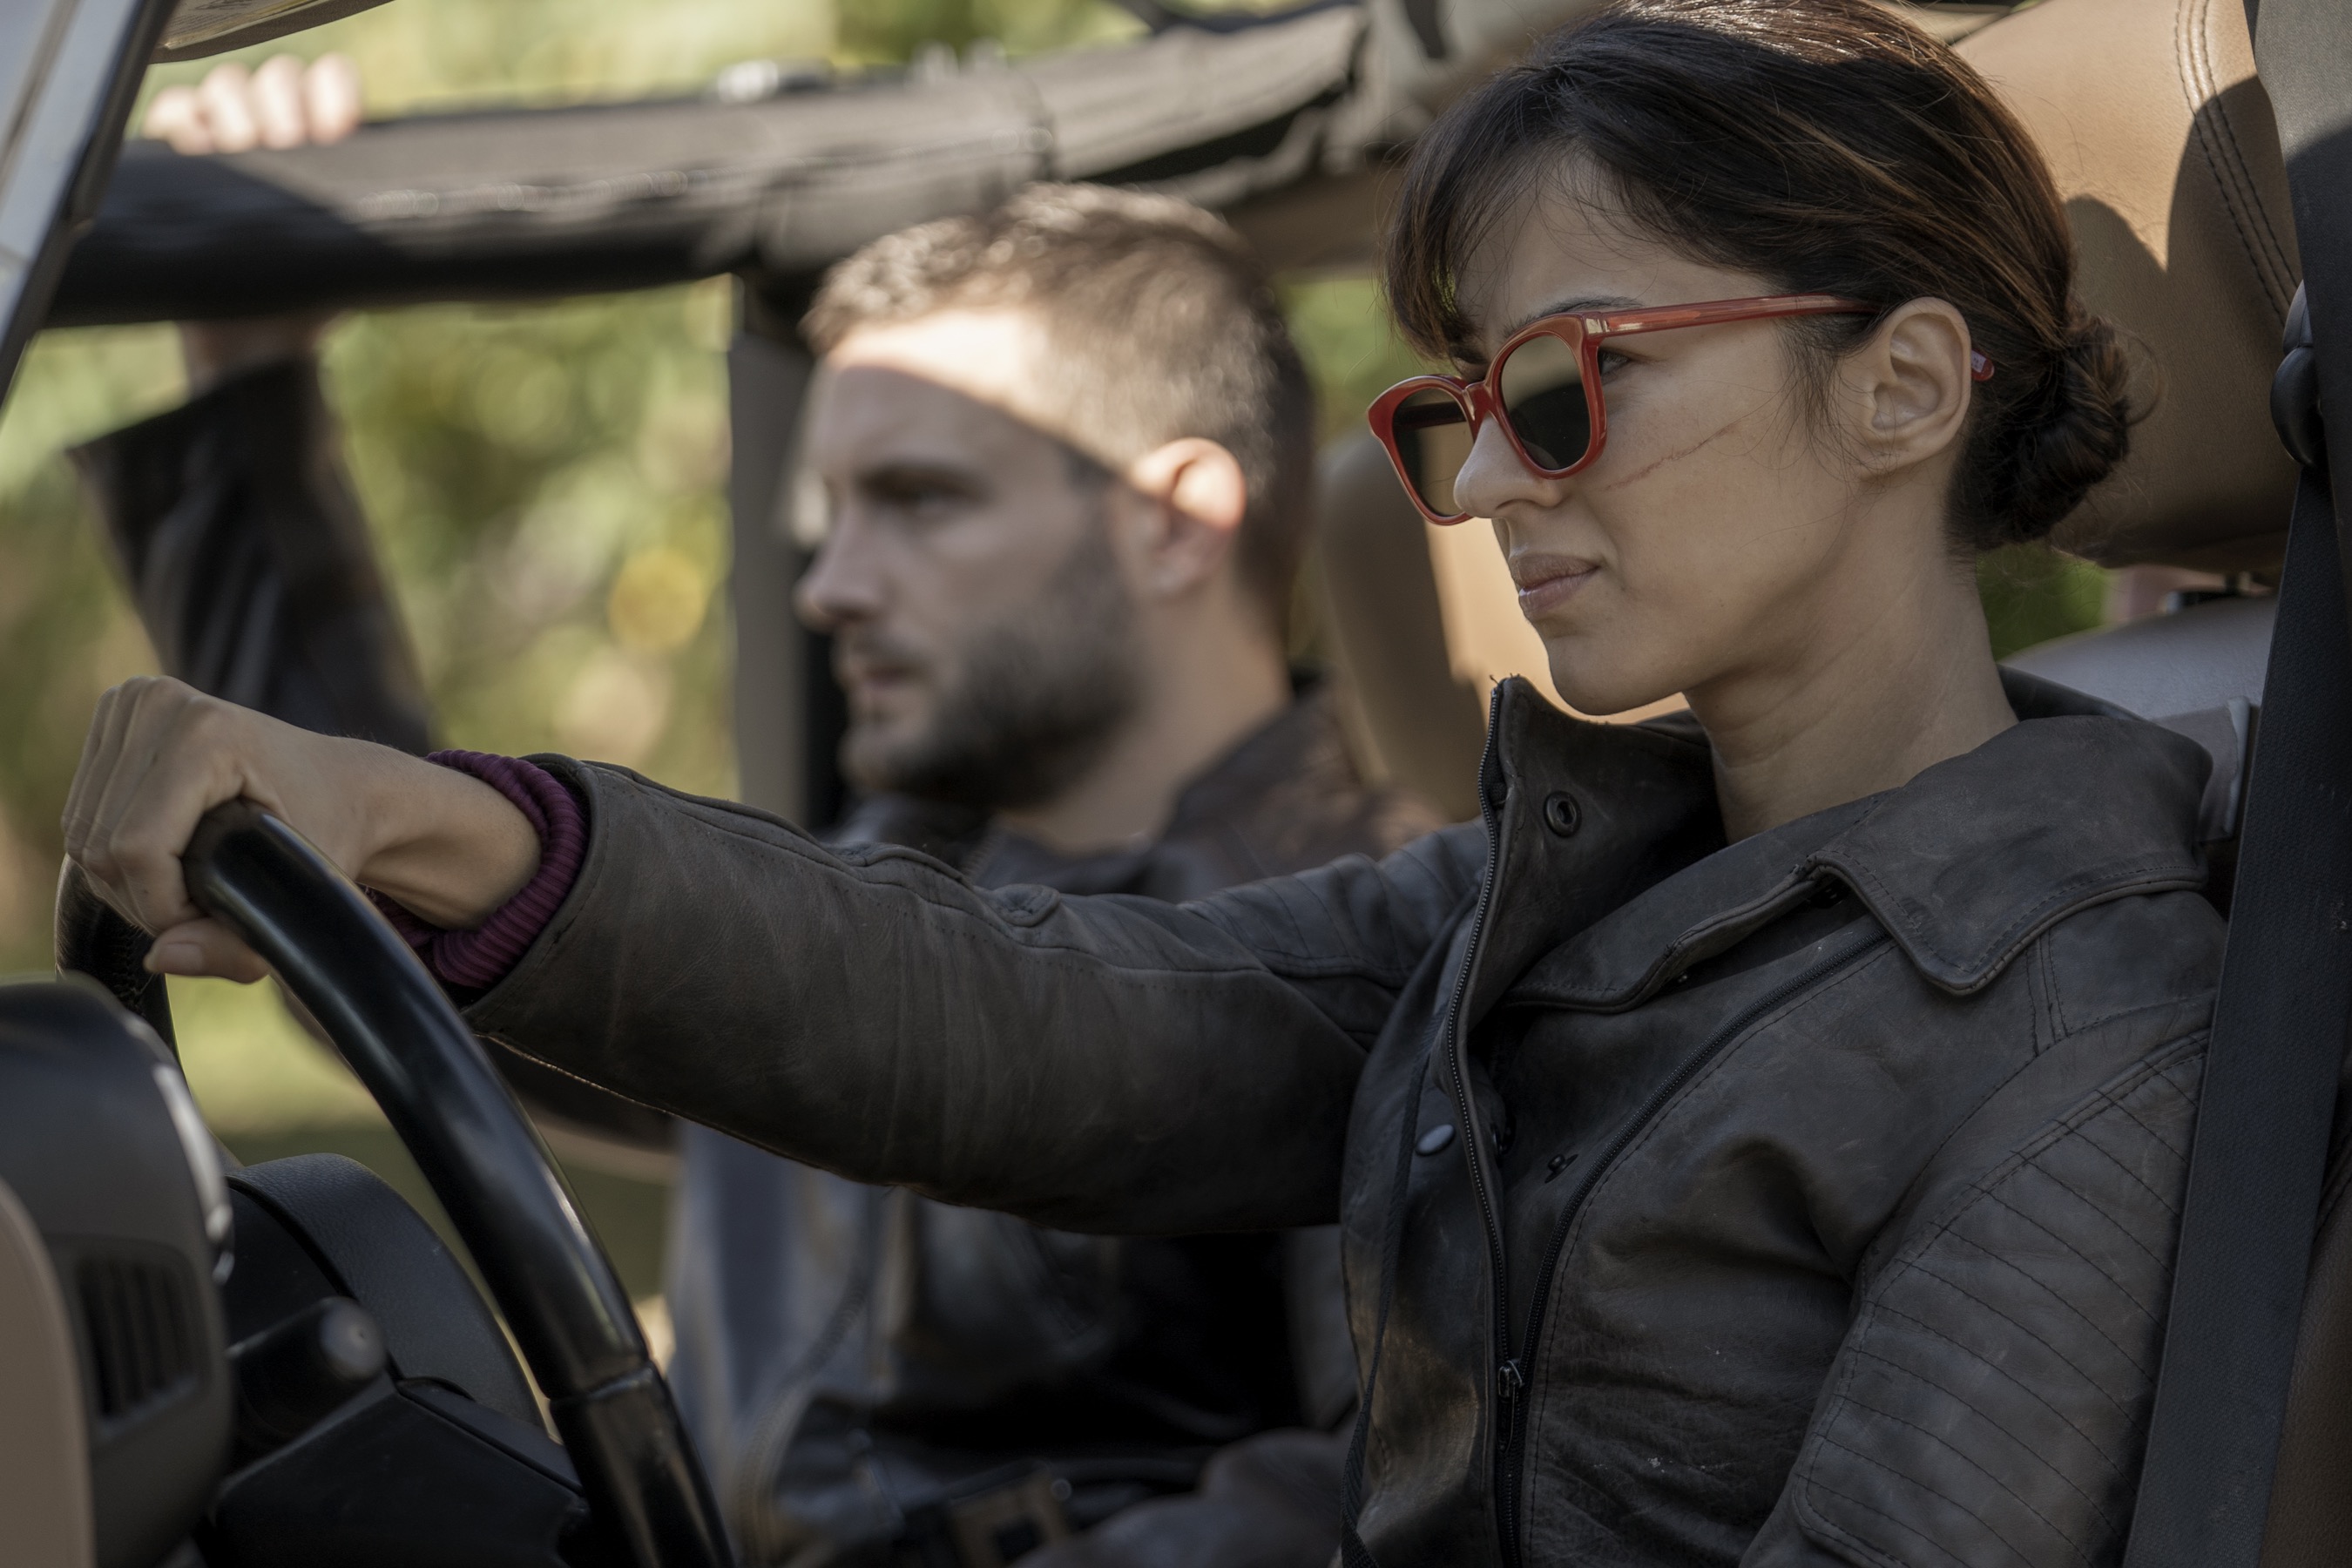 Annet Mahendru as Huck, Nico Tortorella as Felix - The Walking Dead: World Beyond _ Season 1, Episode 1 - Photo Credit: Zach Dilgard/AMC